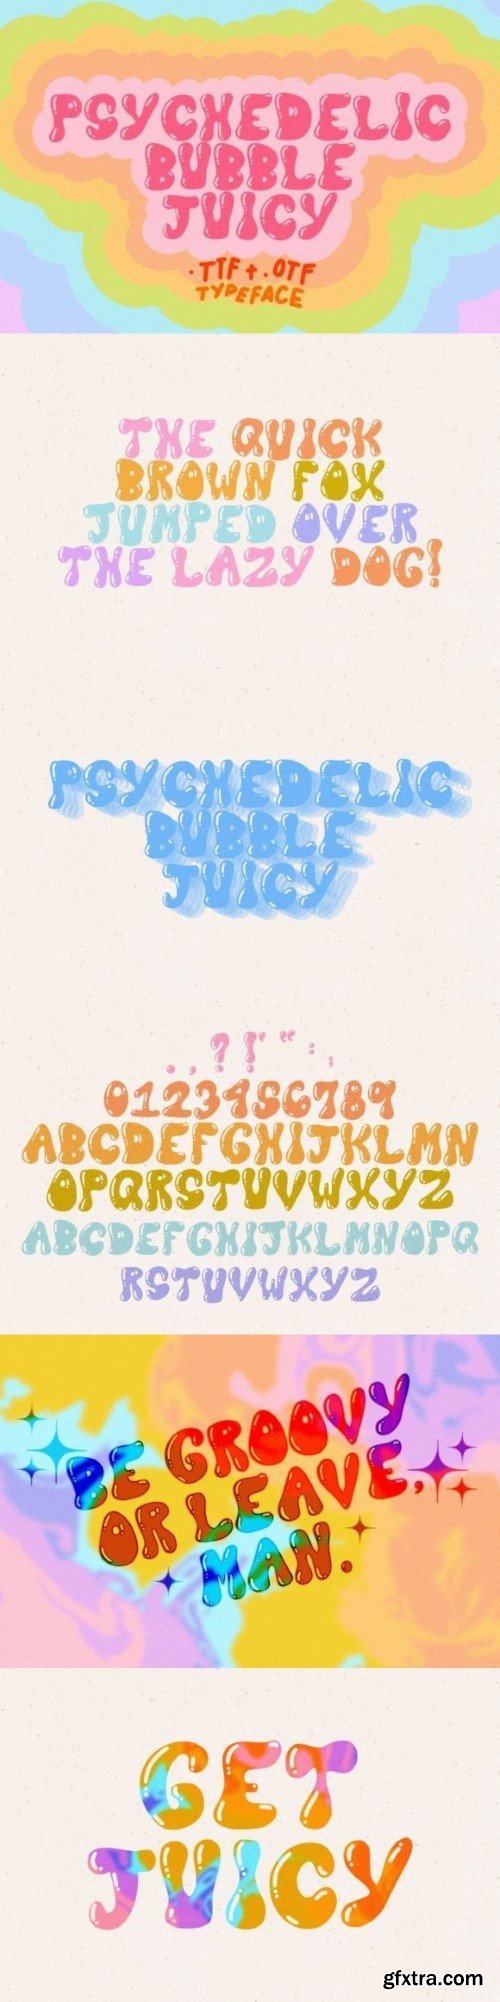 Psychedelic Bubble Juicy Font